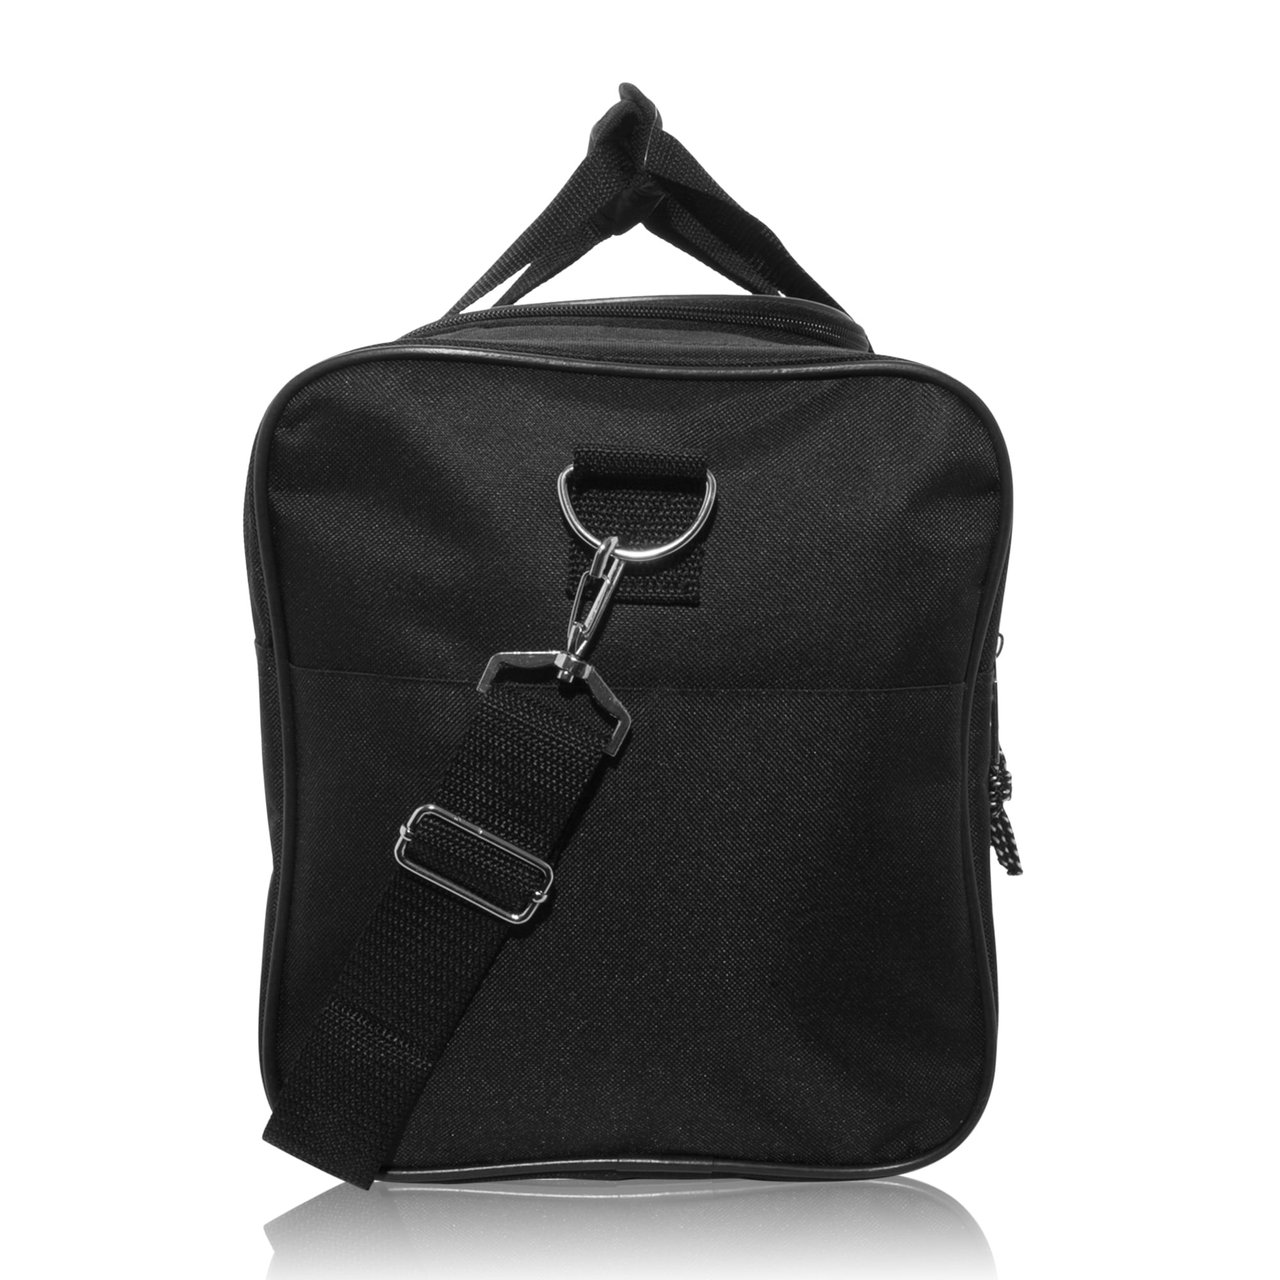 1 DALIX 17 Plain Duffel Bag in Black